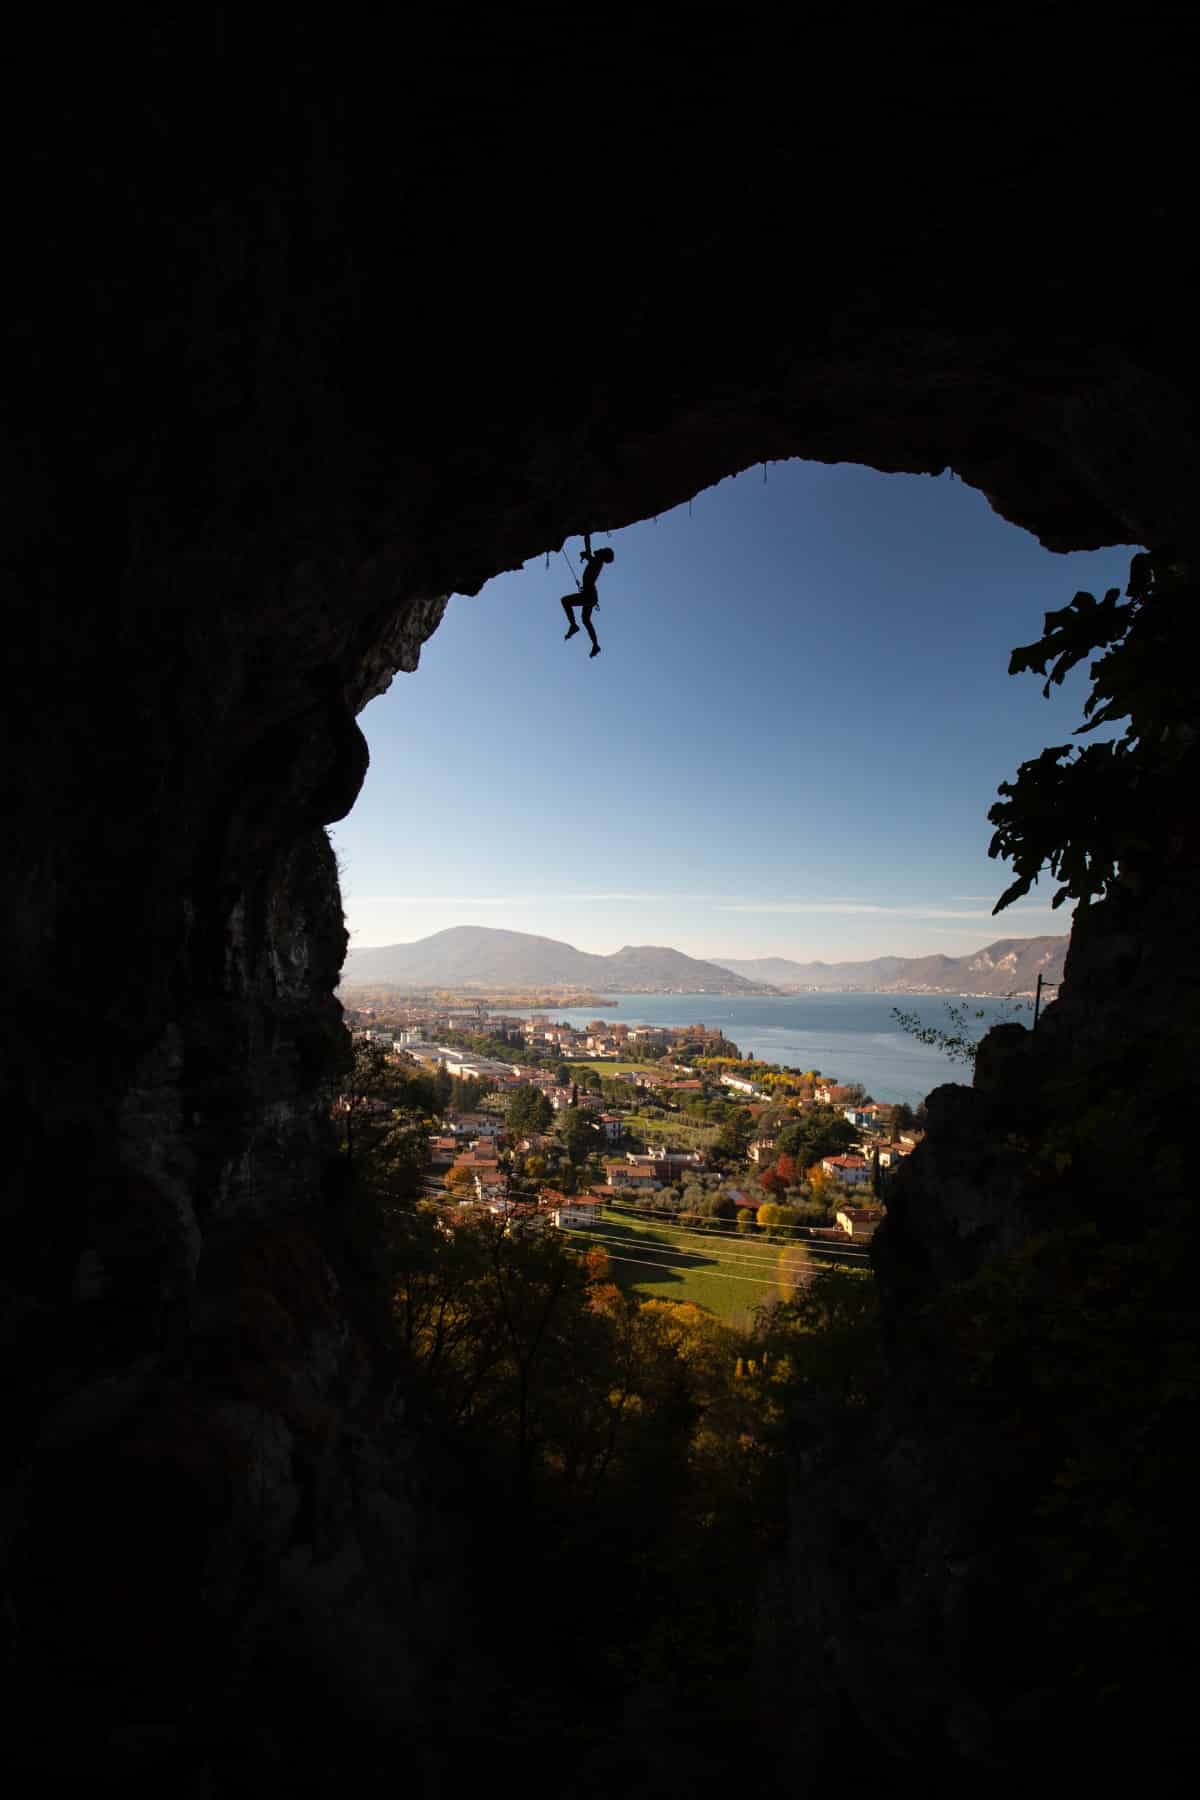 Person Rock Climbing in Silhouette